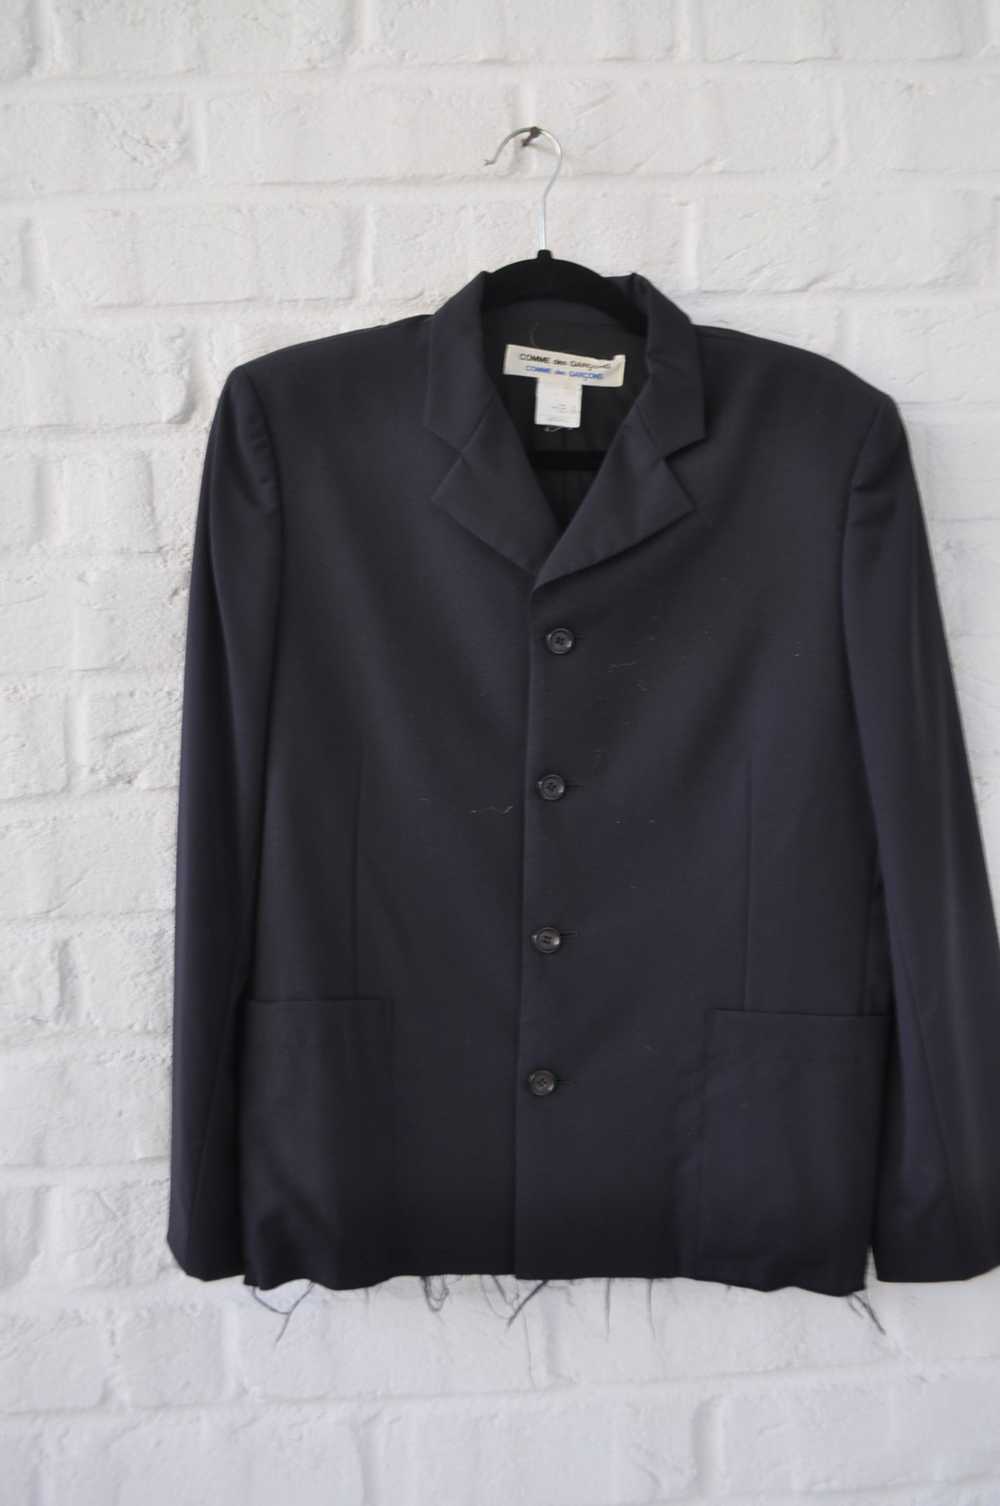 Comme des Garçons apron dress and jacket from 89 - image 7